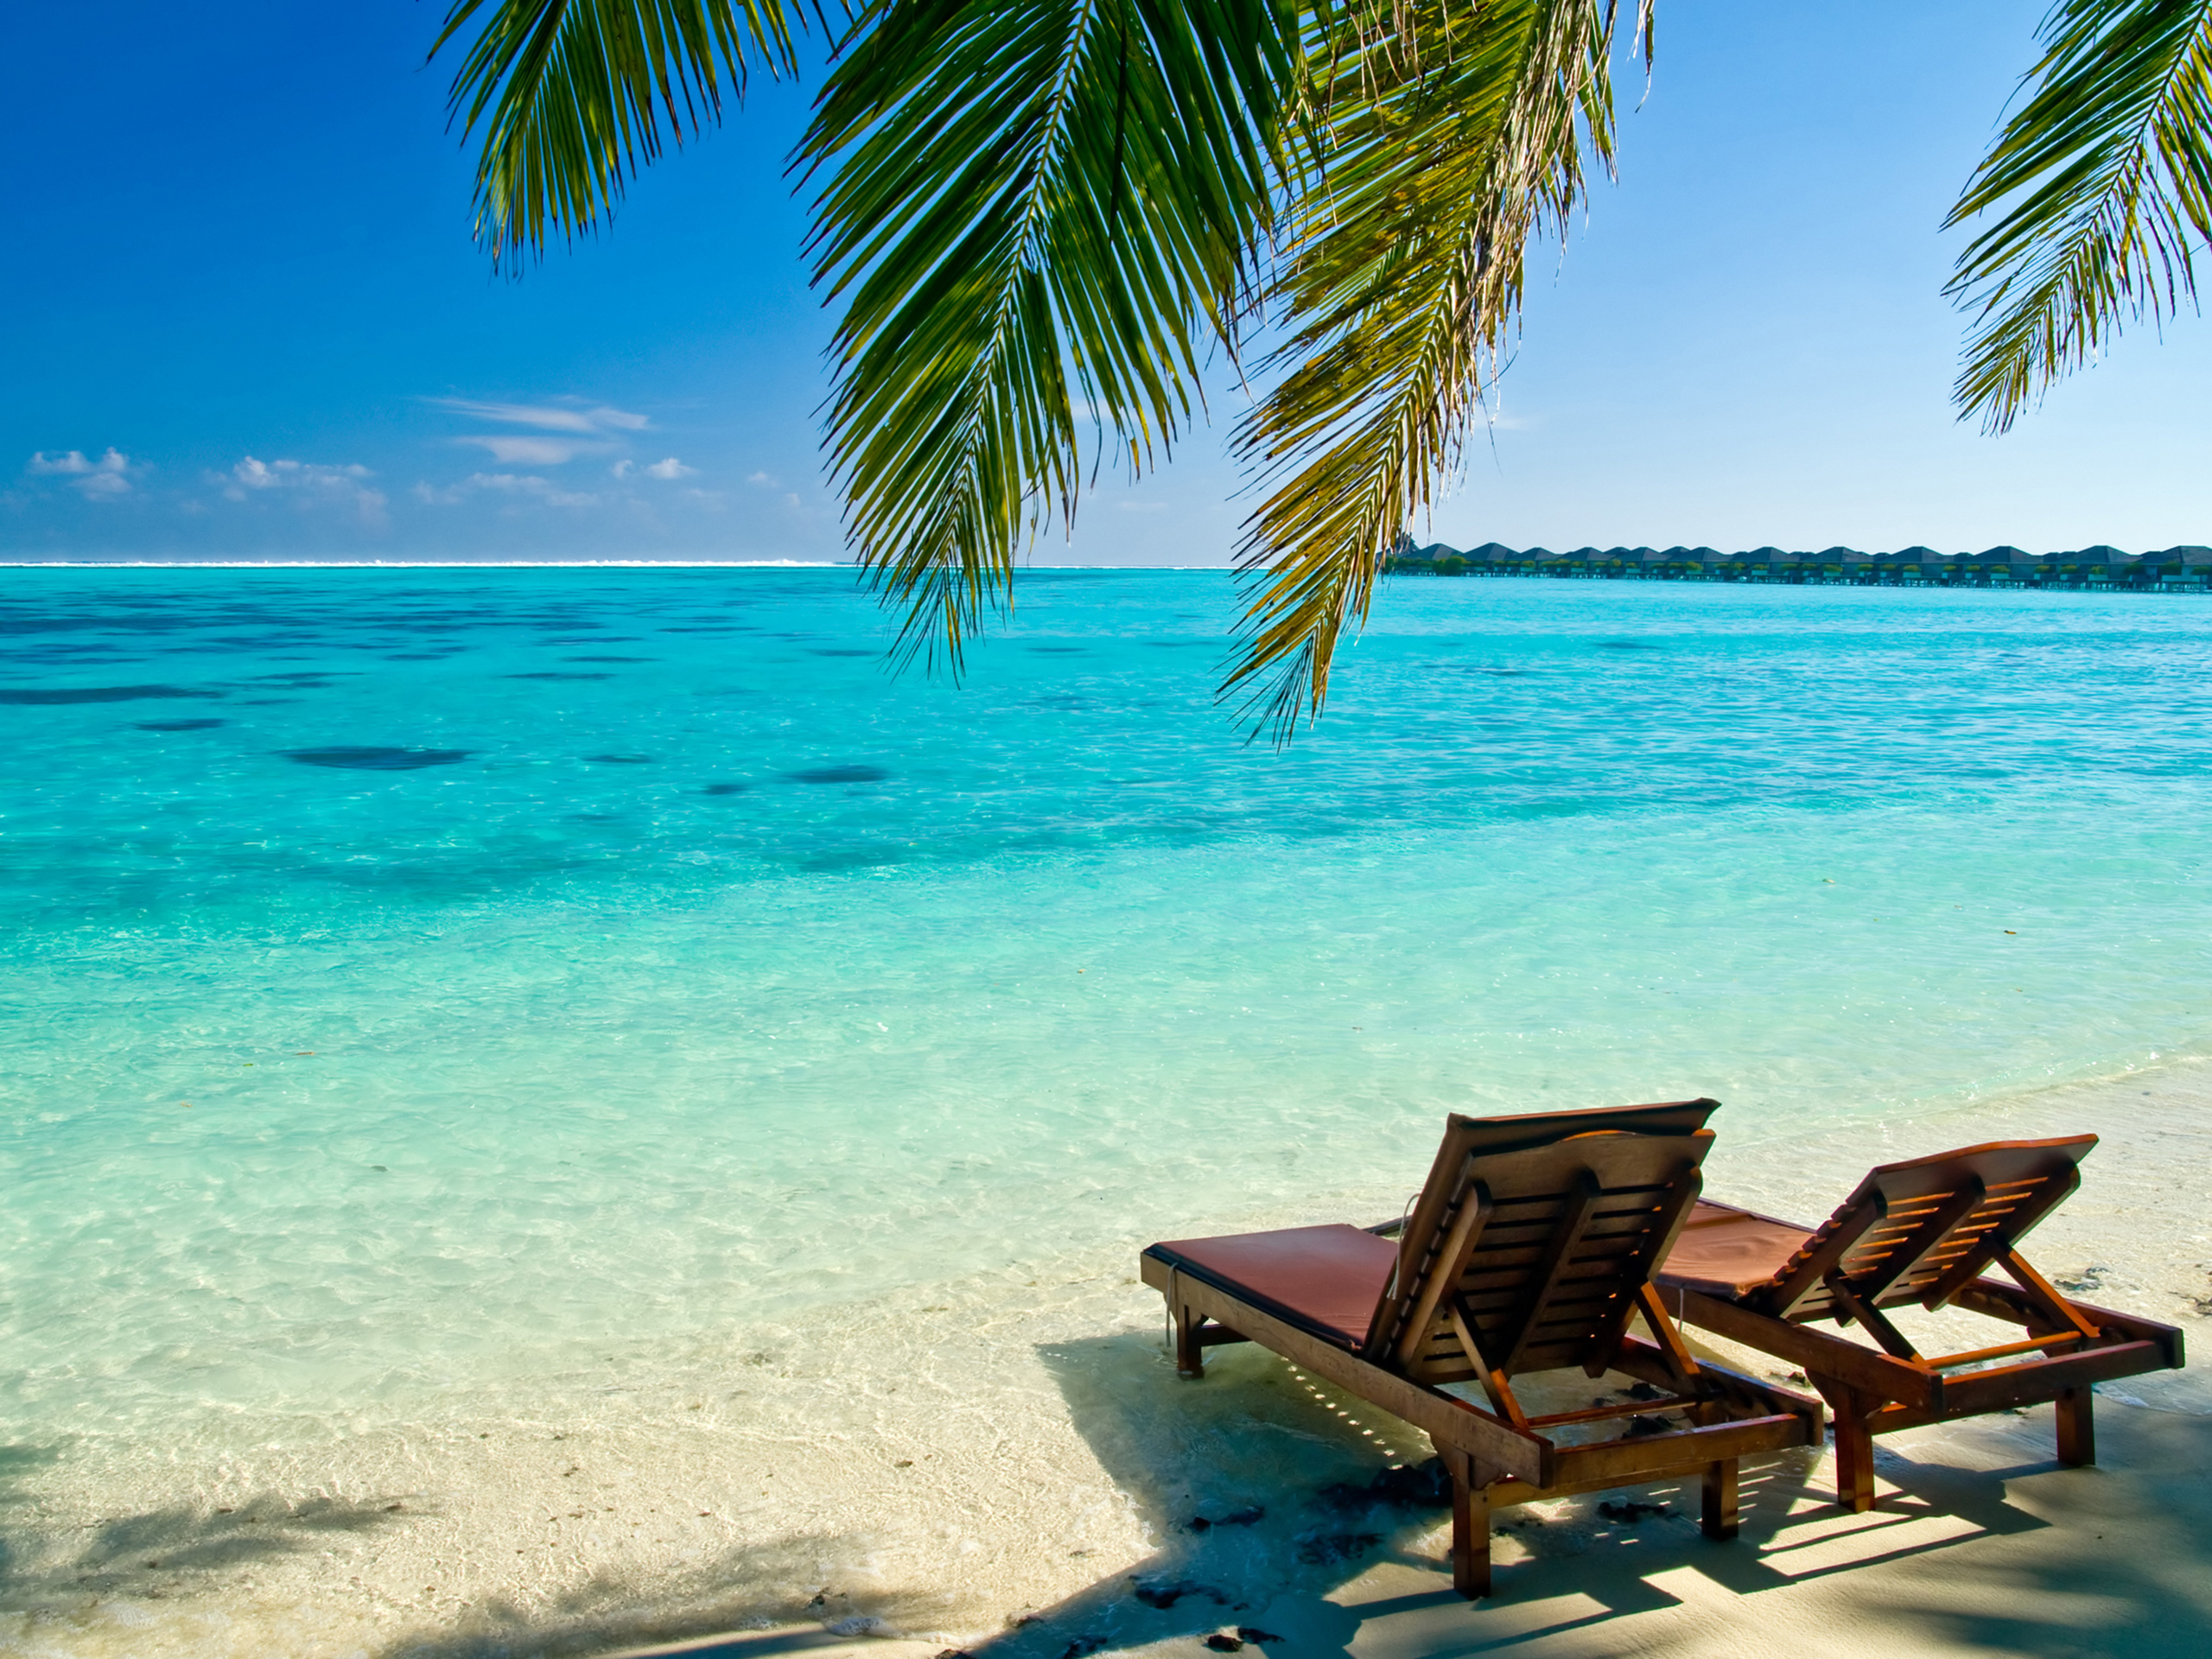 sfondo del desktop estivo gratuito,vacanza,caraibico,palma,turchese,oceano